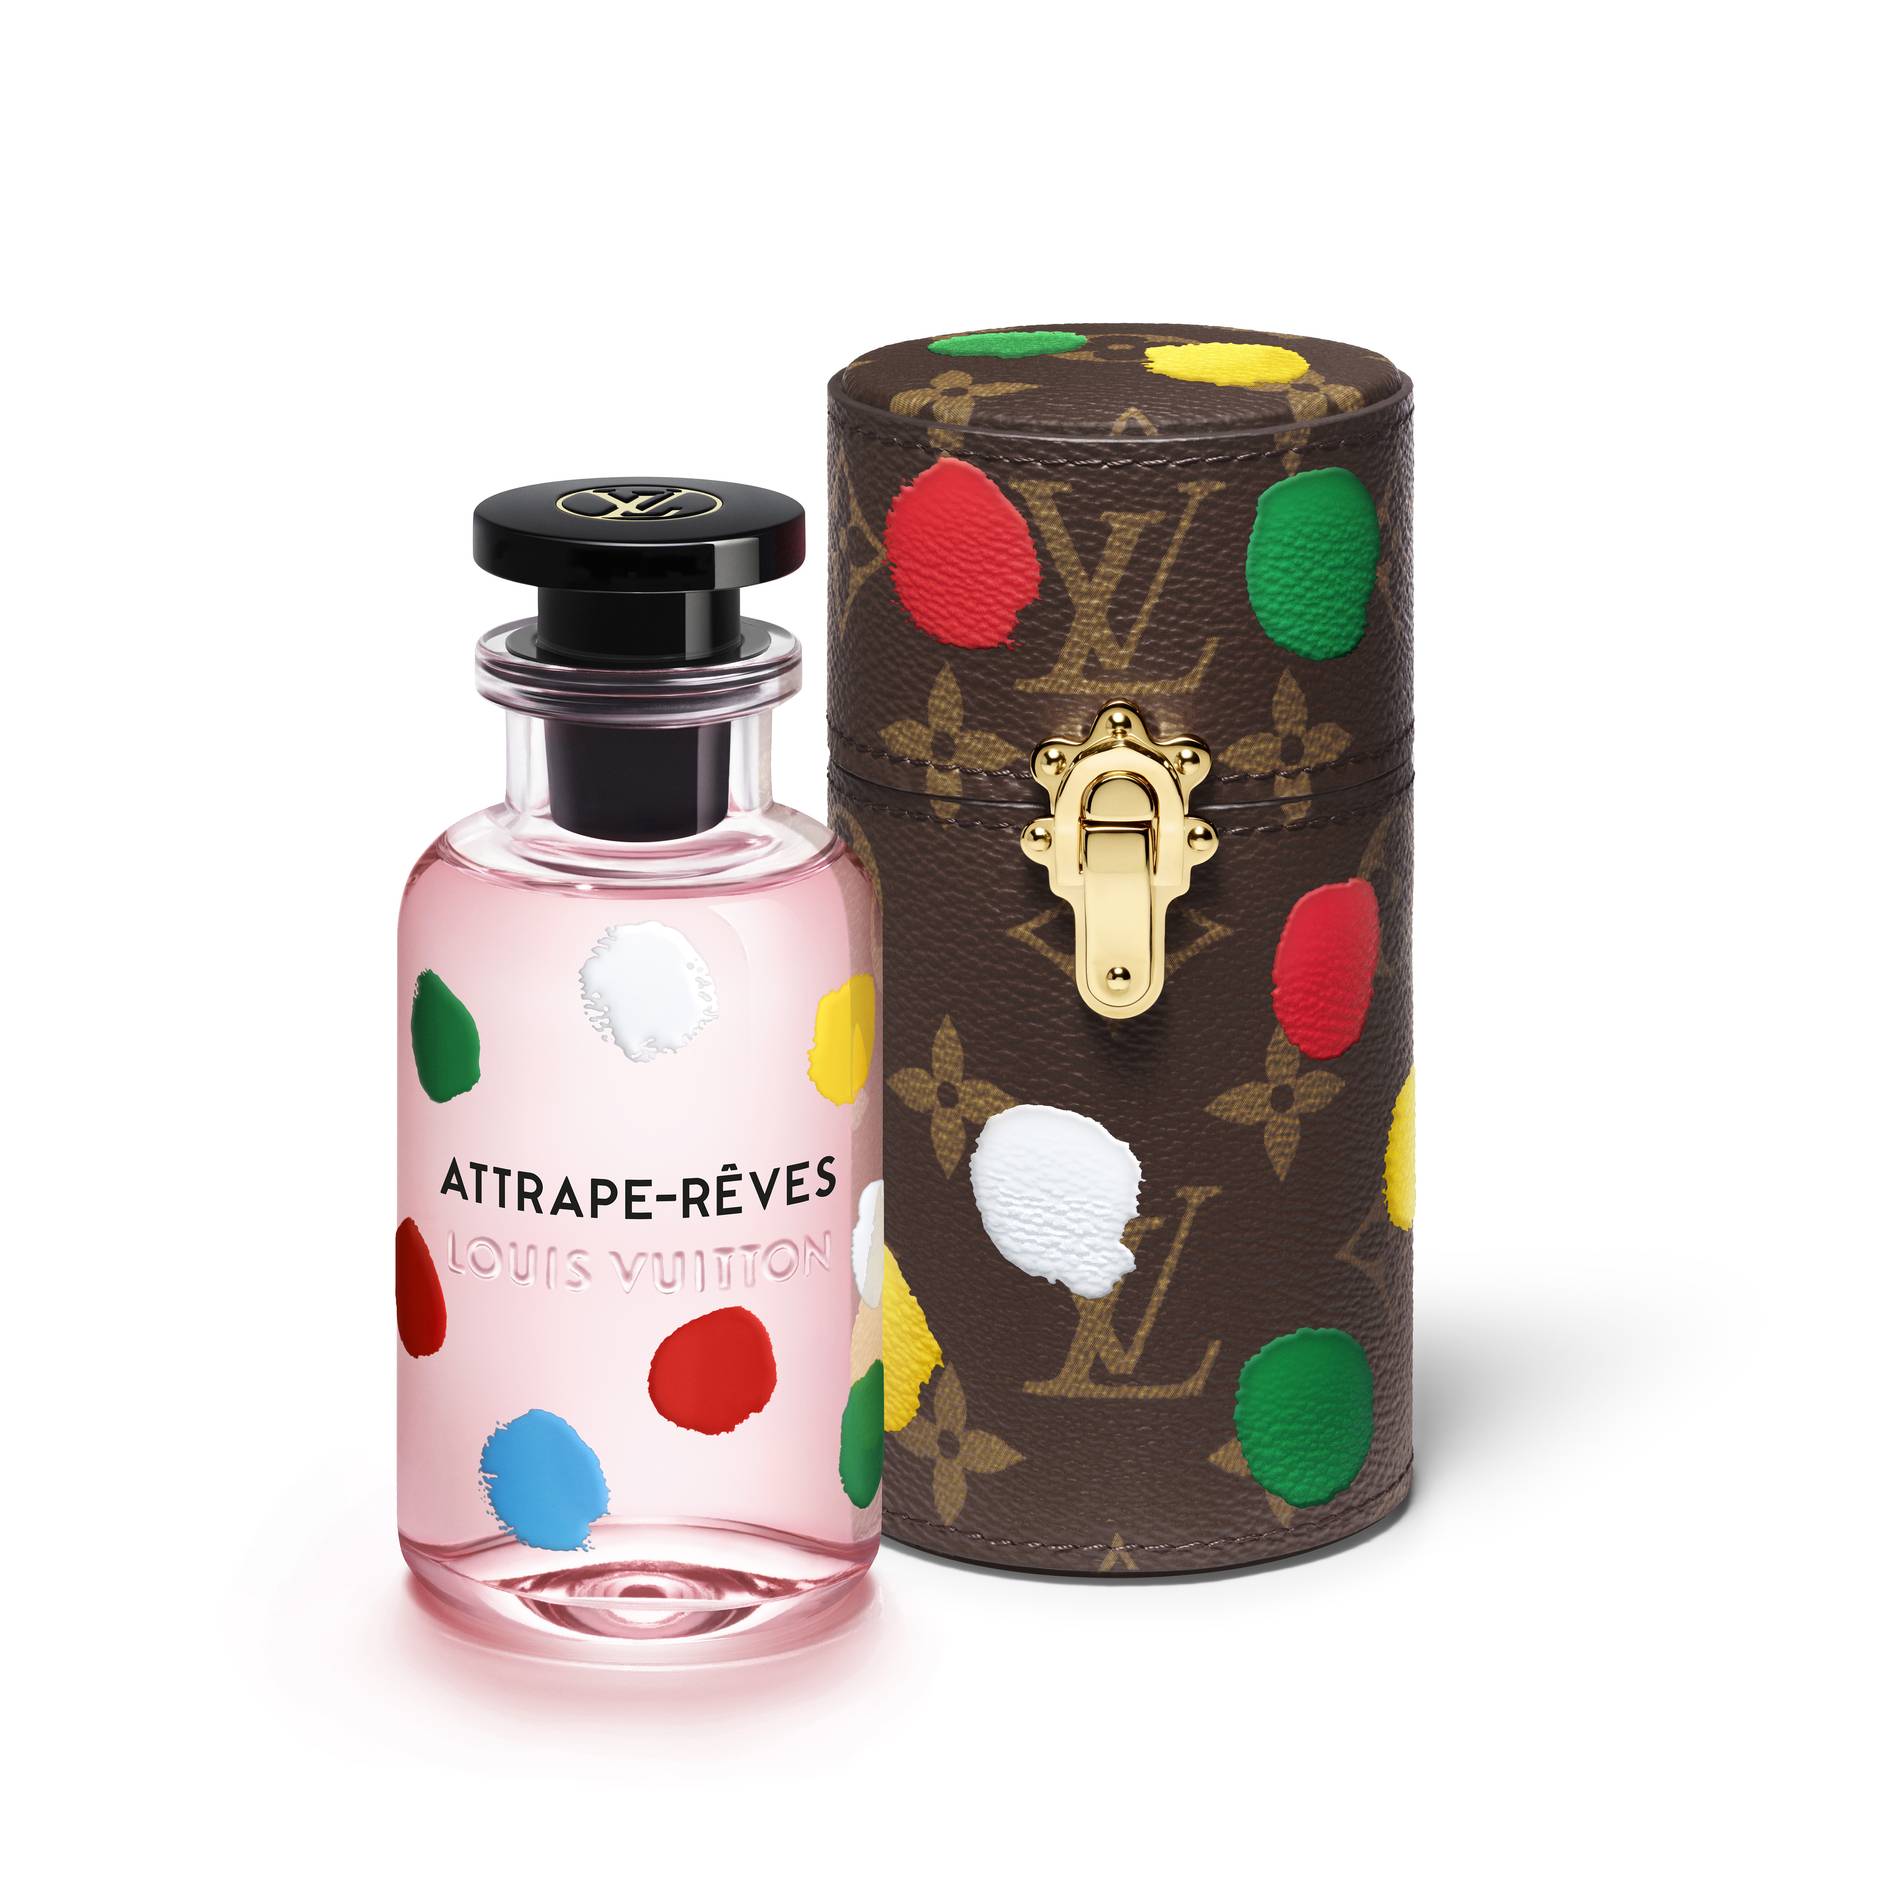 Attrape-Reves Louis Vuitton fragrance bottle designed by Yayoi Kusama